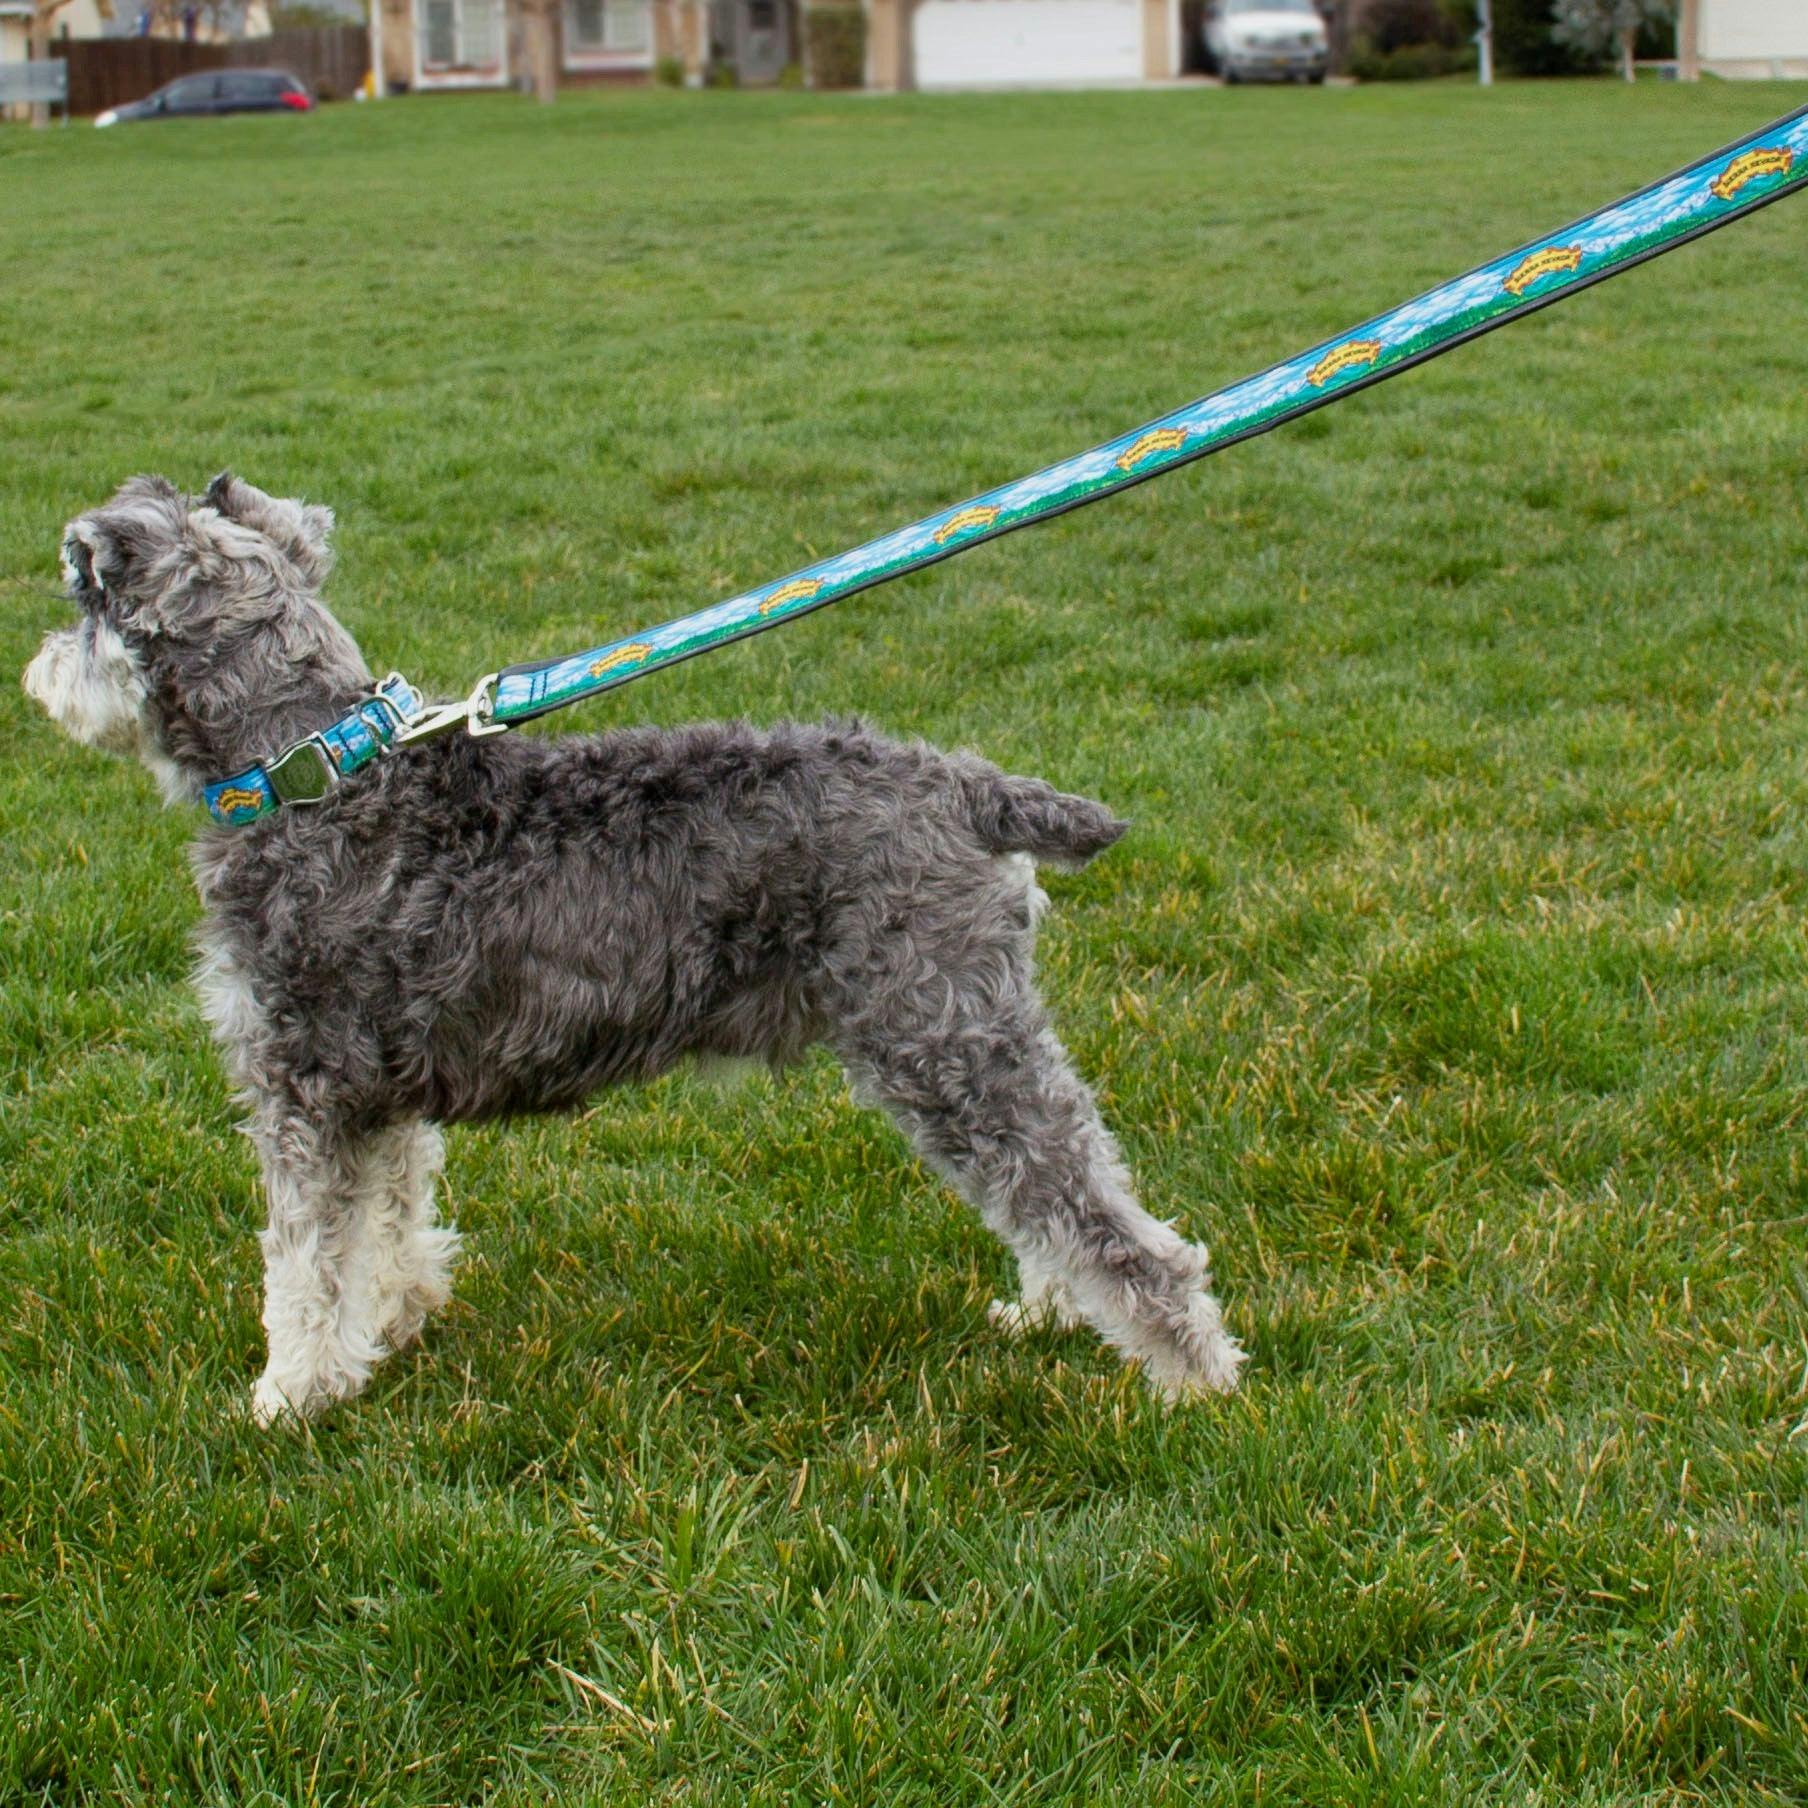 Sierra Nevada dog lead on a dog wearing a leash and collar